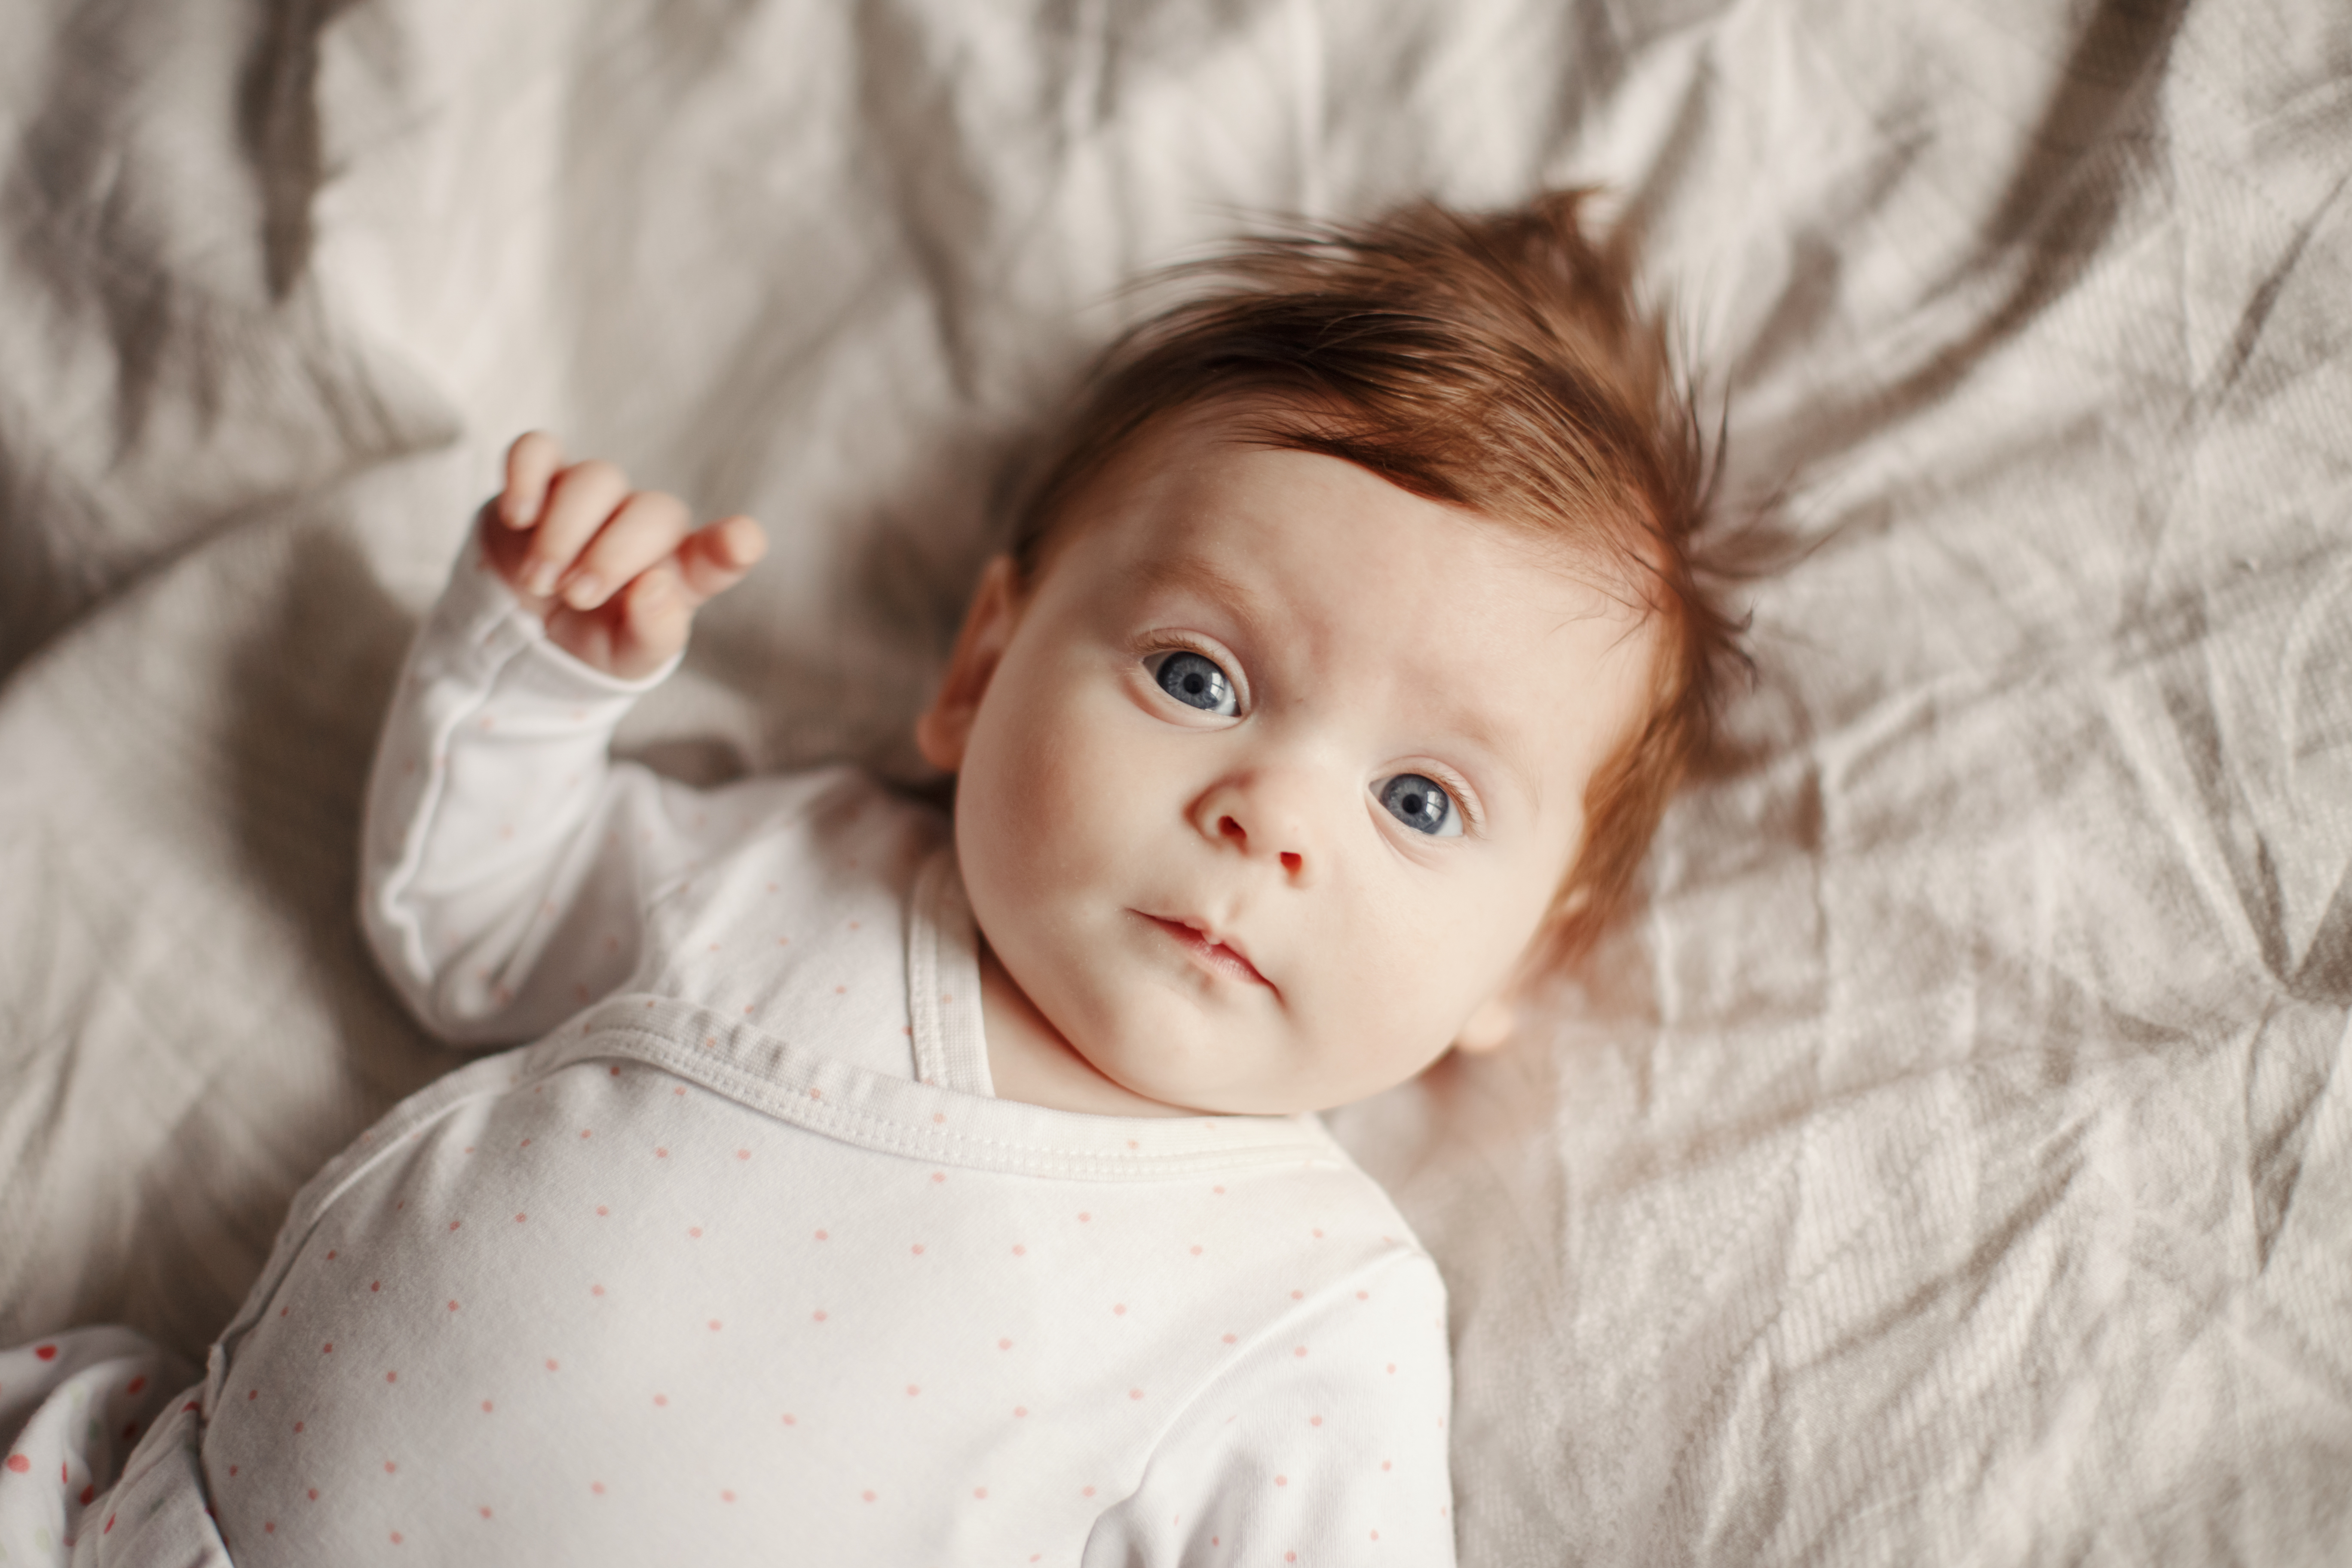 Newborn baby | Source: Shutterstock